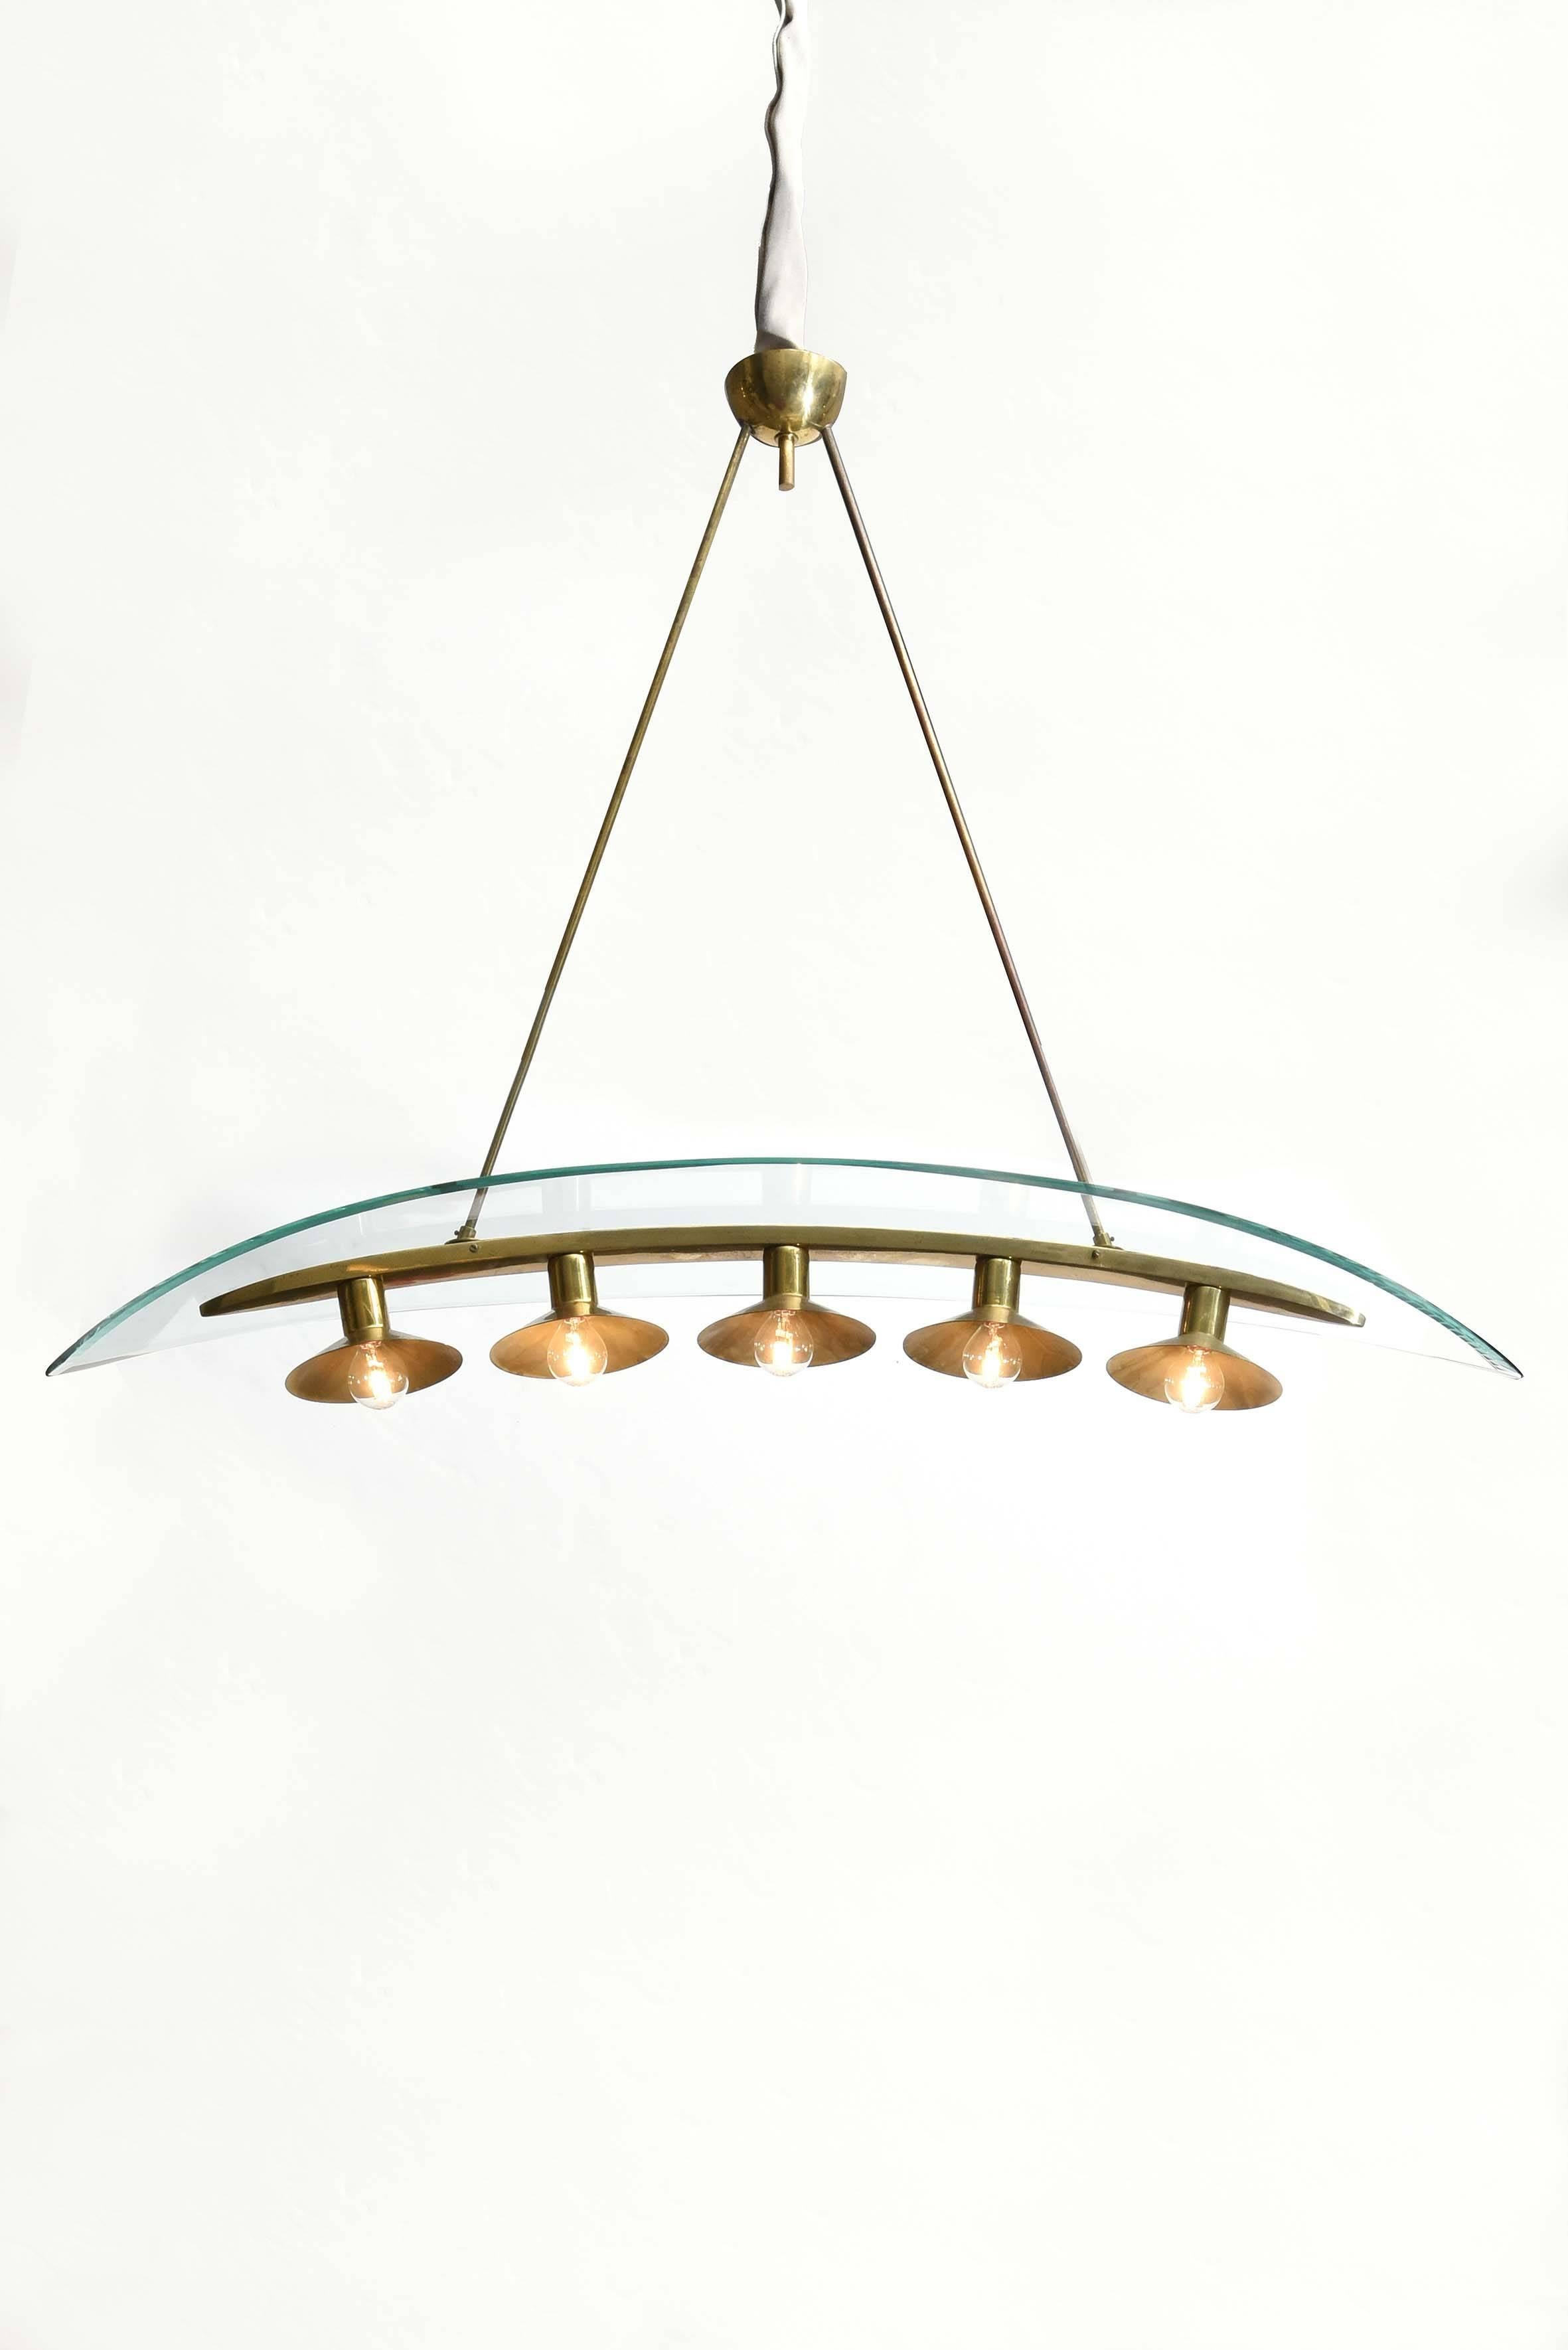 Five-light chandelier, bent glass plate, brass framework.
Designed by Pietro Chiesa for Fontana Arte, 1940s.